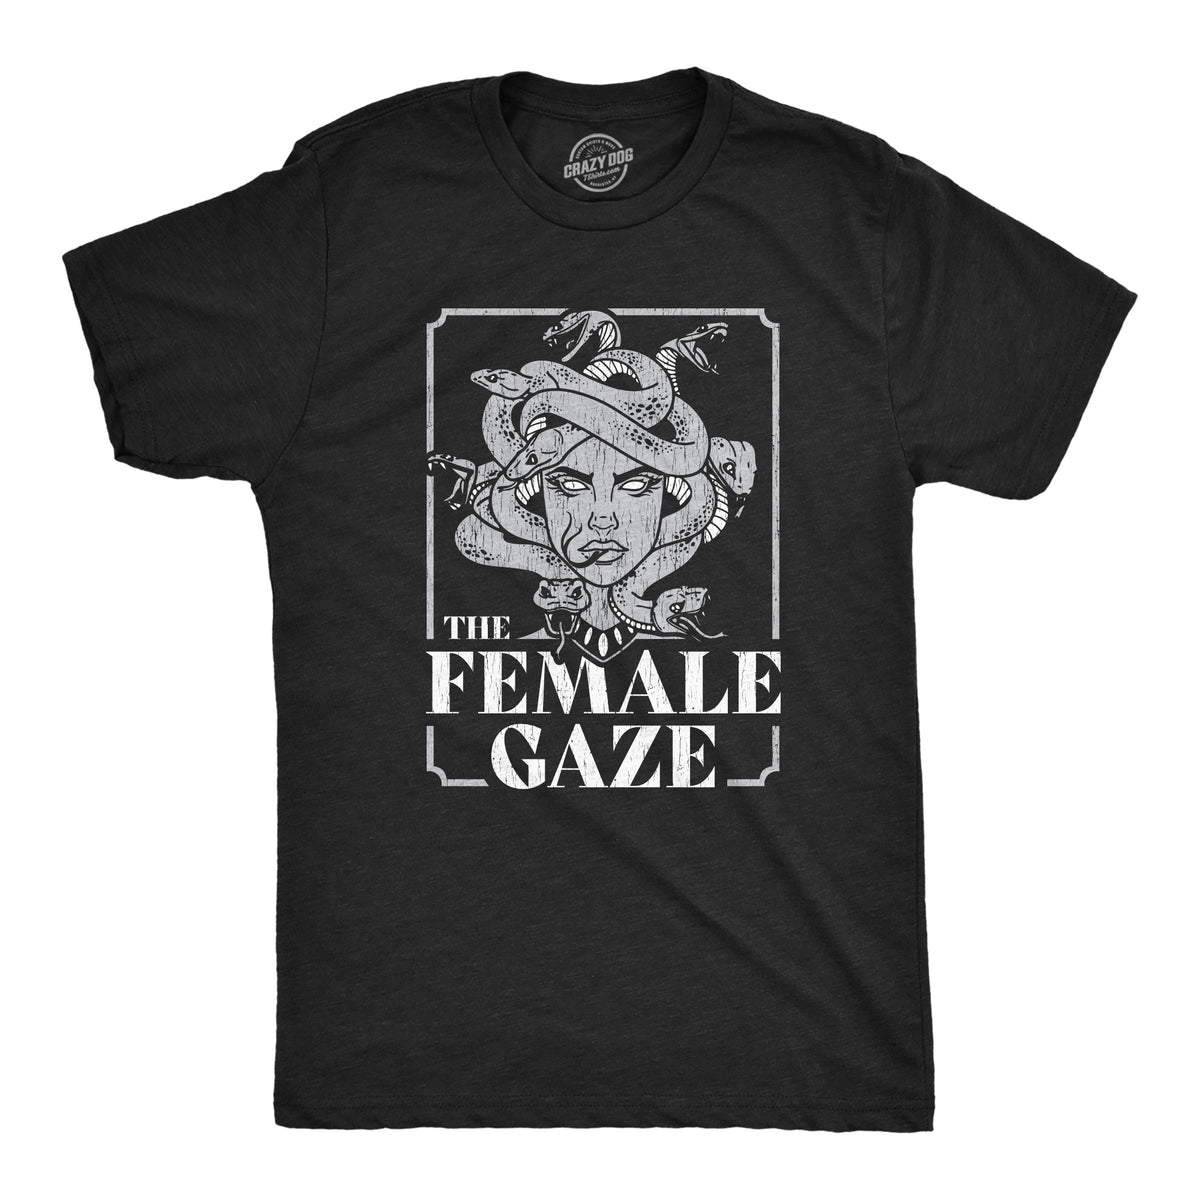 Funny Heather Black - GAZE The Female Gaze Mens T Shirt Nerdy Sarcastic Tee